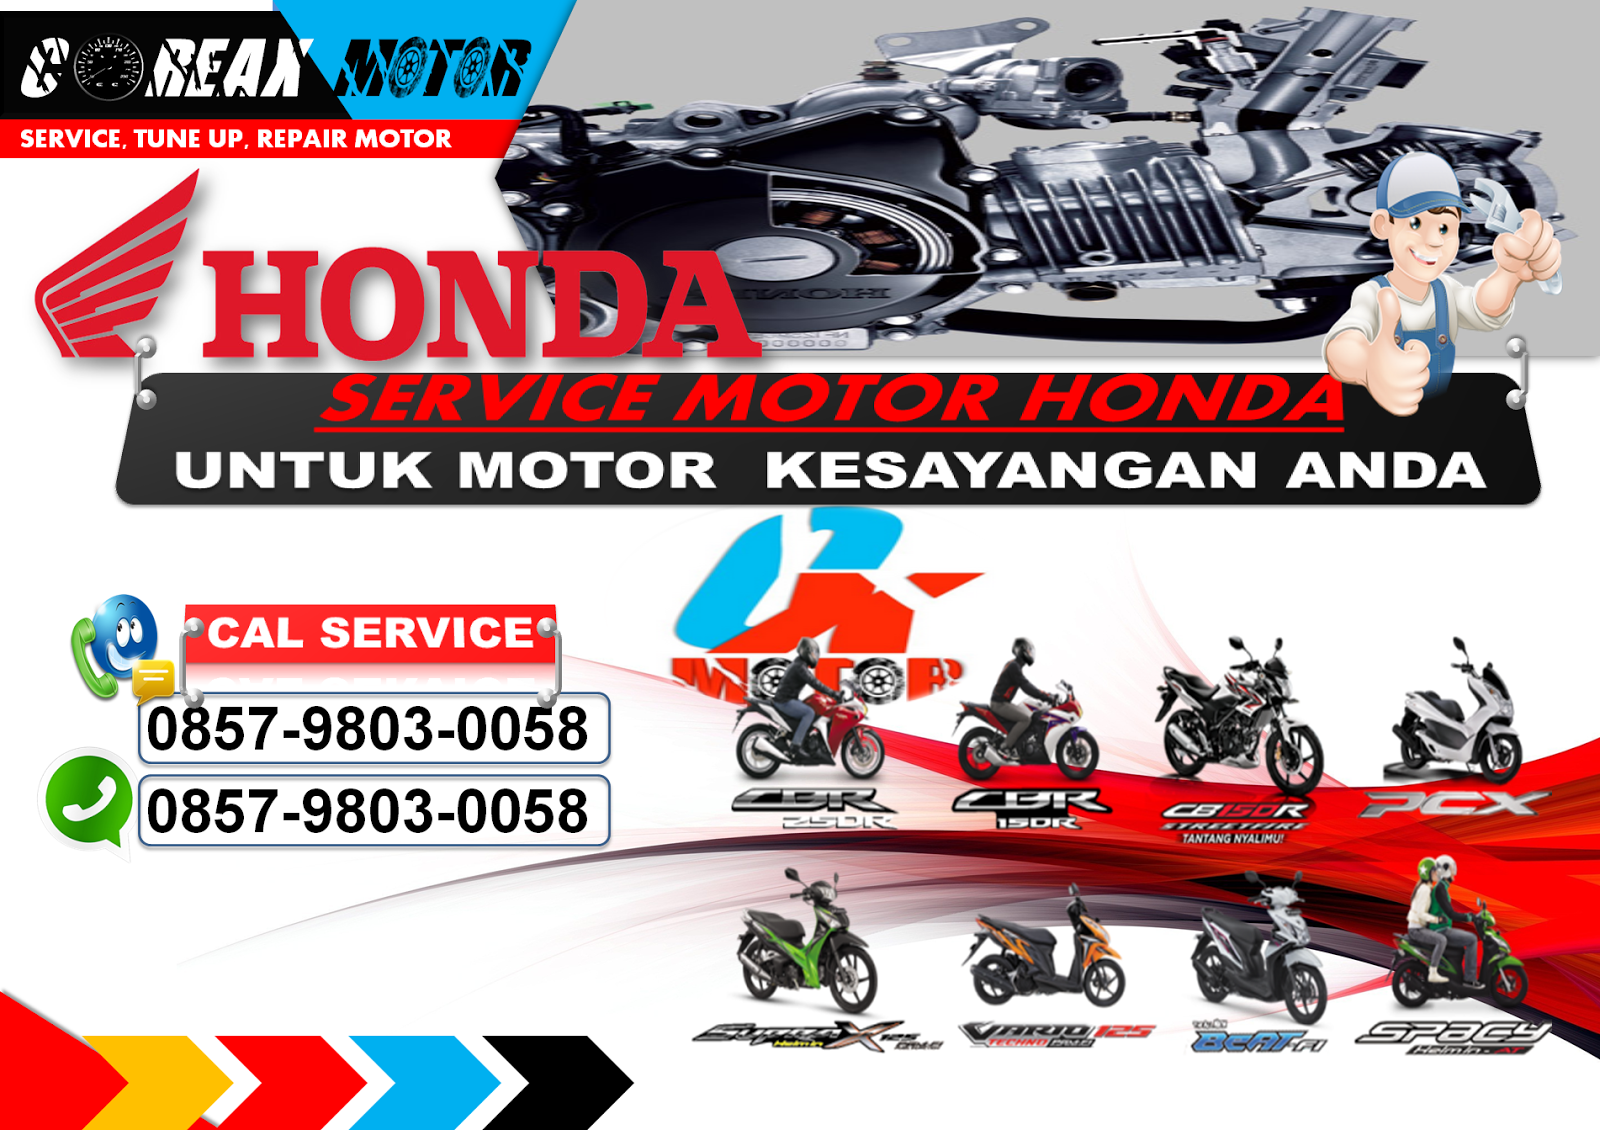 Jasa Service Panggilan Motor Honda Bandung Service Motor